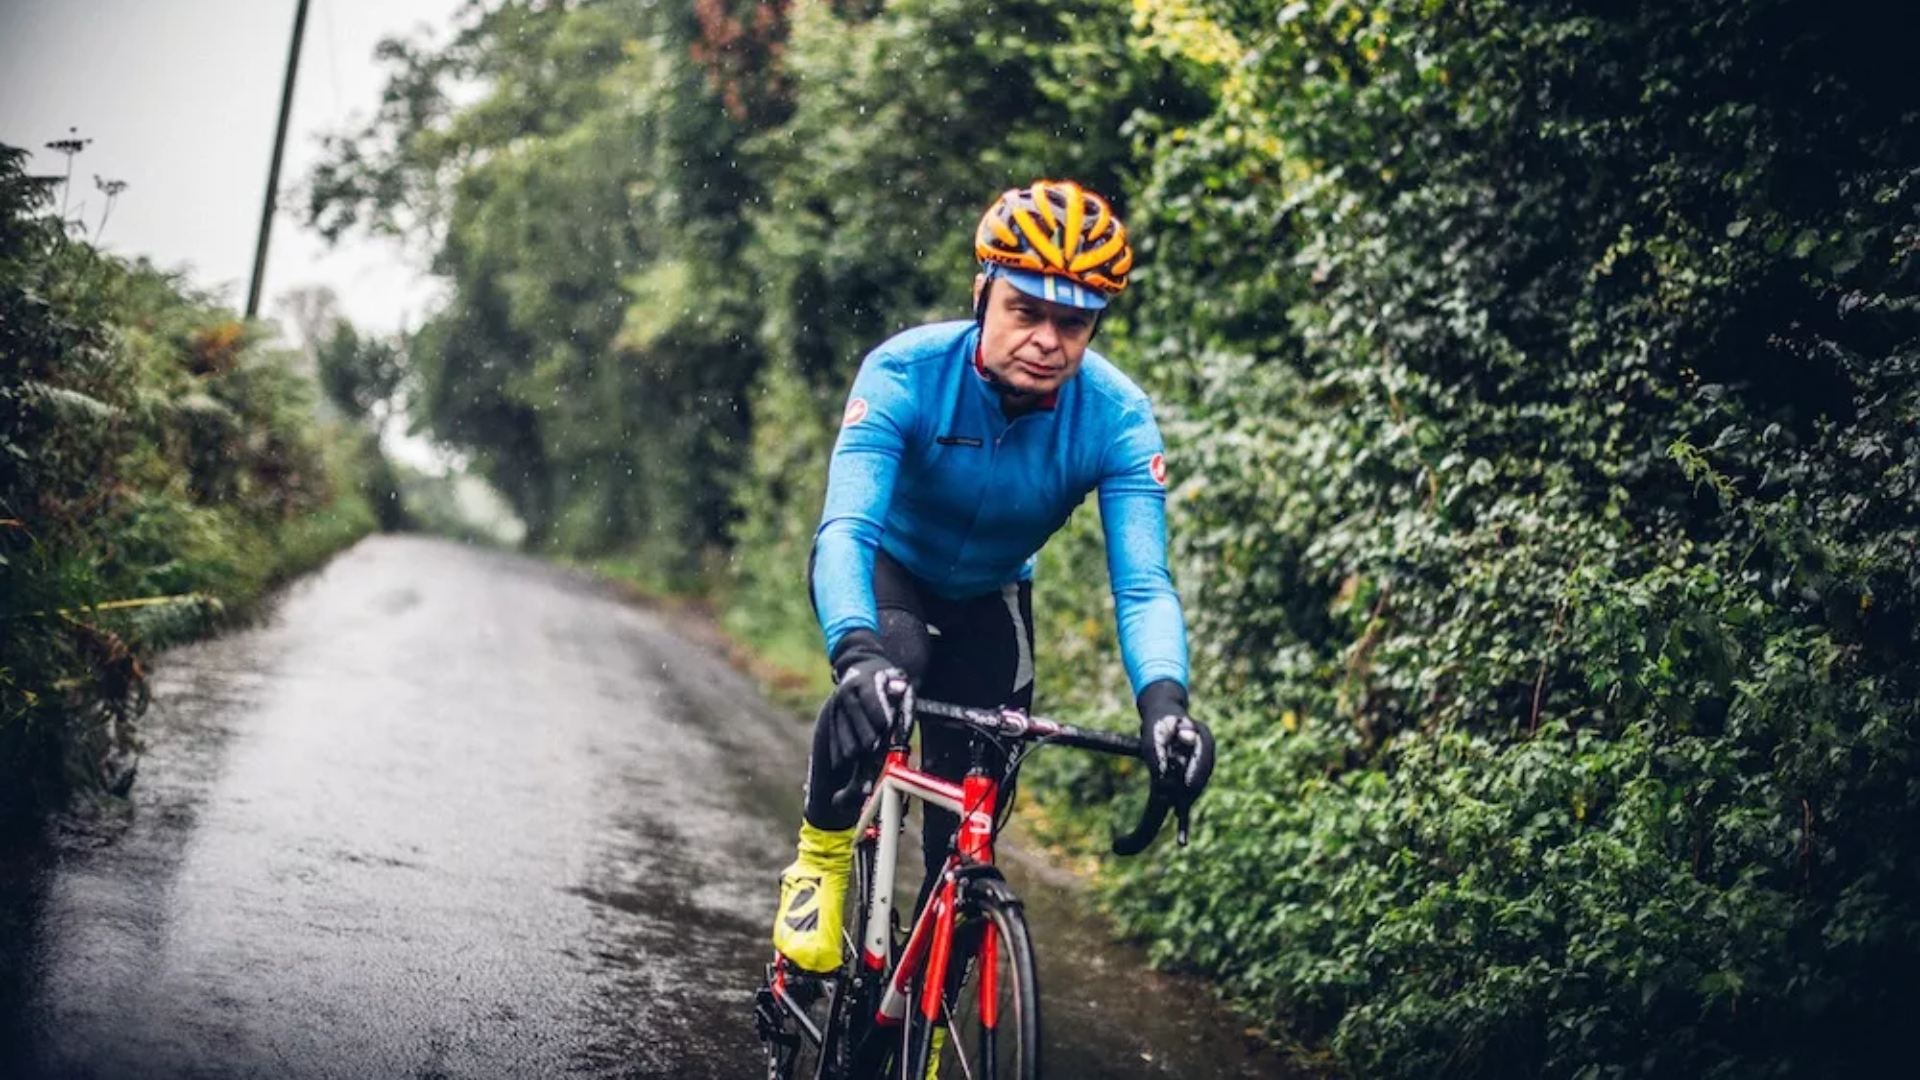 Cycling Jacket Bike Coat Suit High Visible Waterproof Bicycle Top Rain Cover 